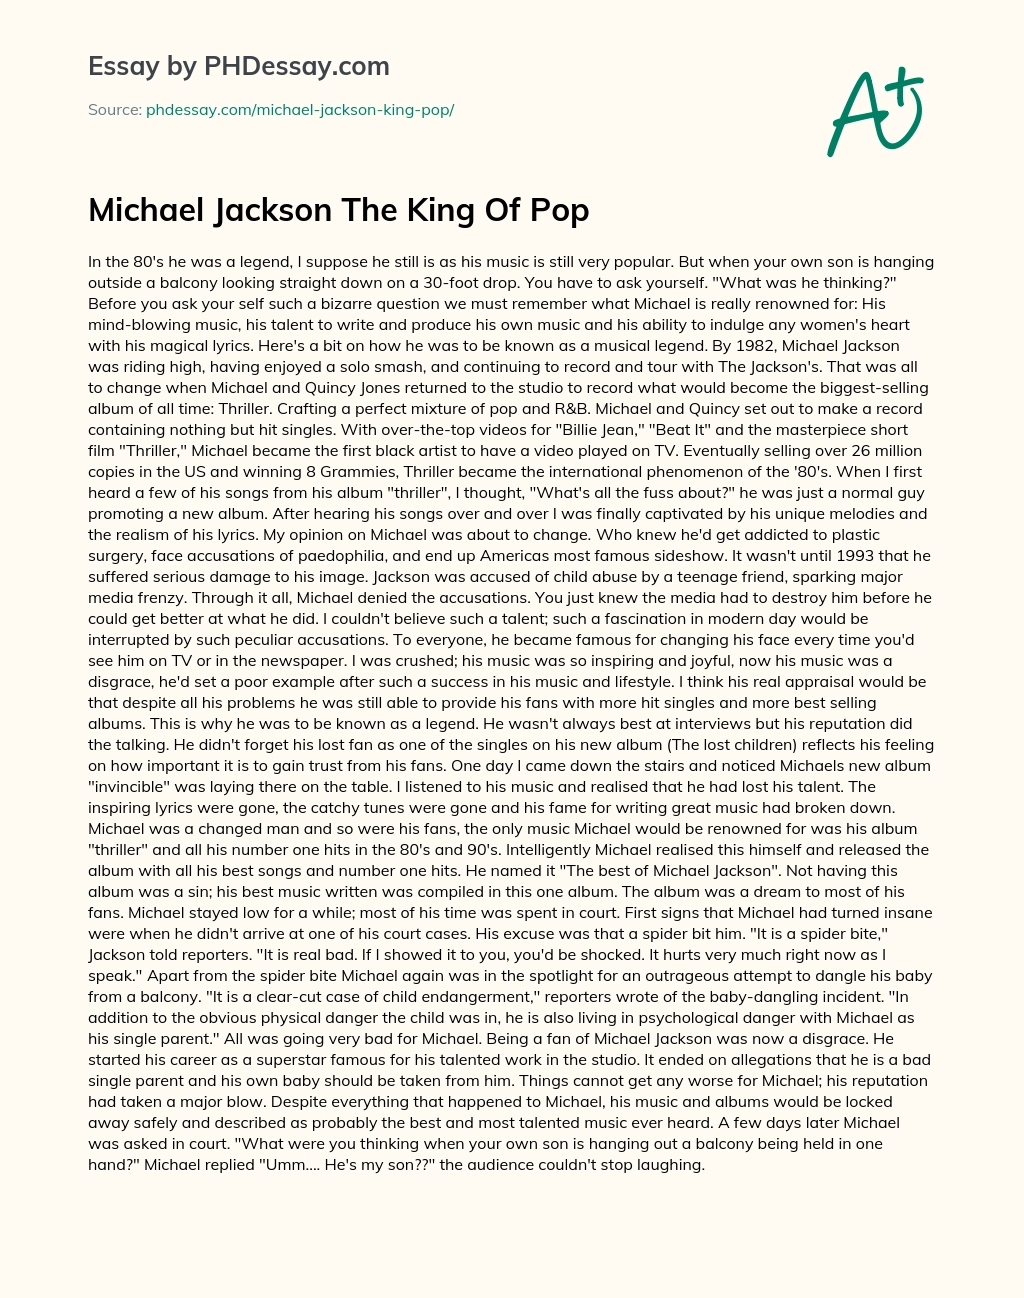 Michael Jackson The King Of Pop essay